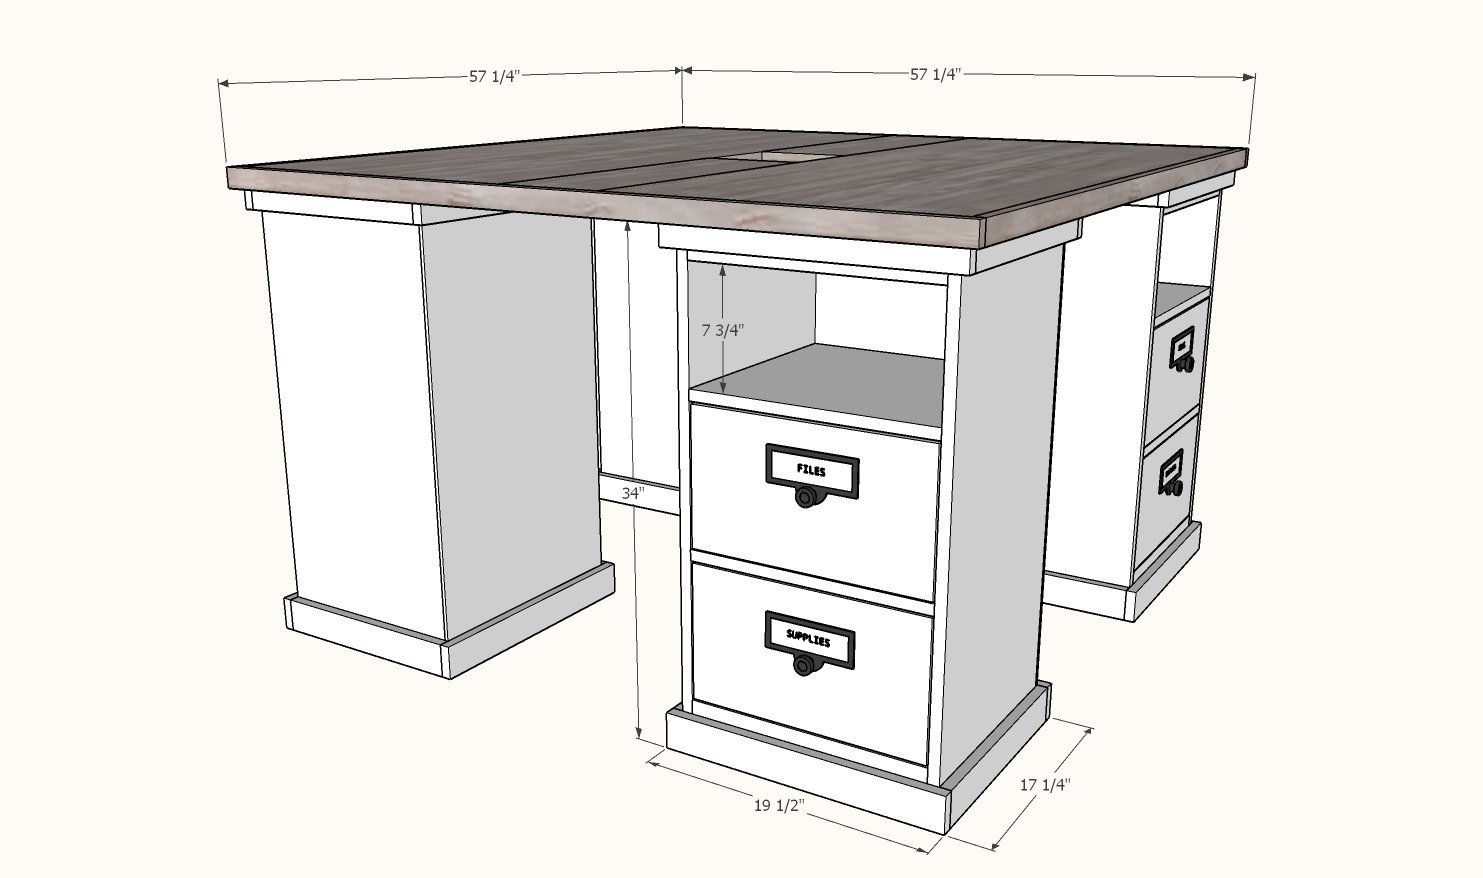 Dimensions for counter height desk pbteen mega desk